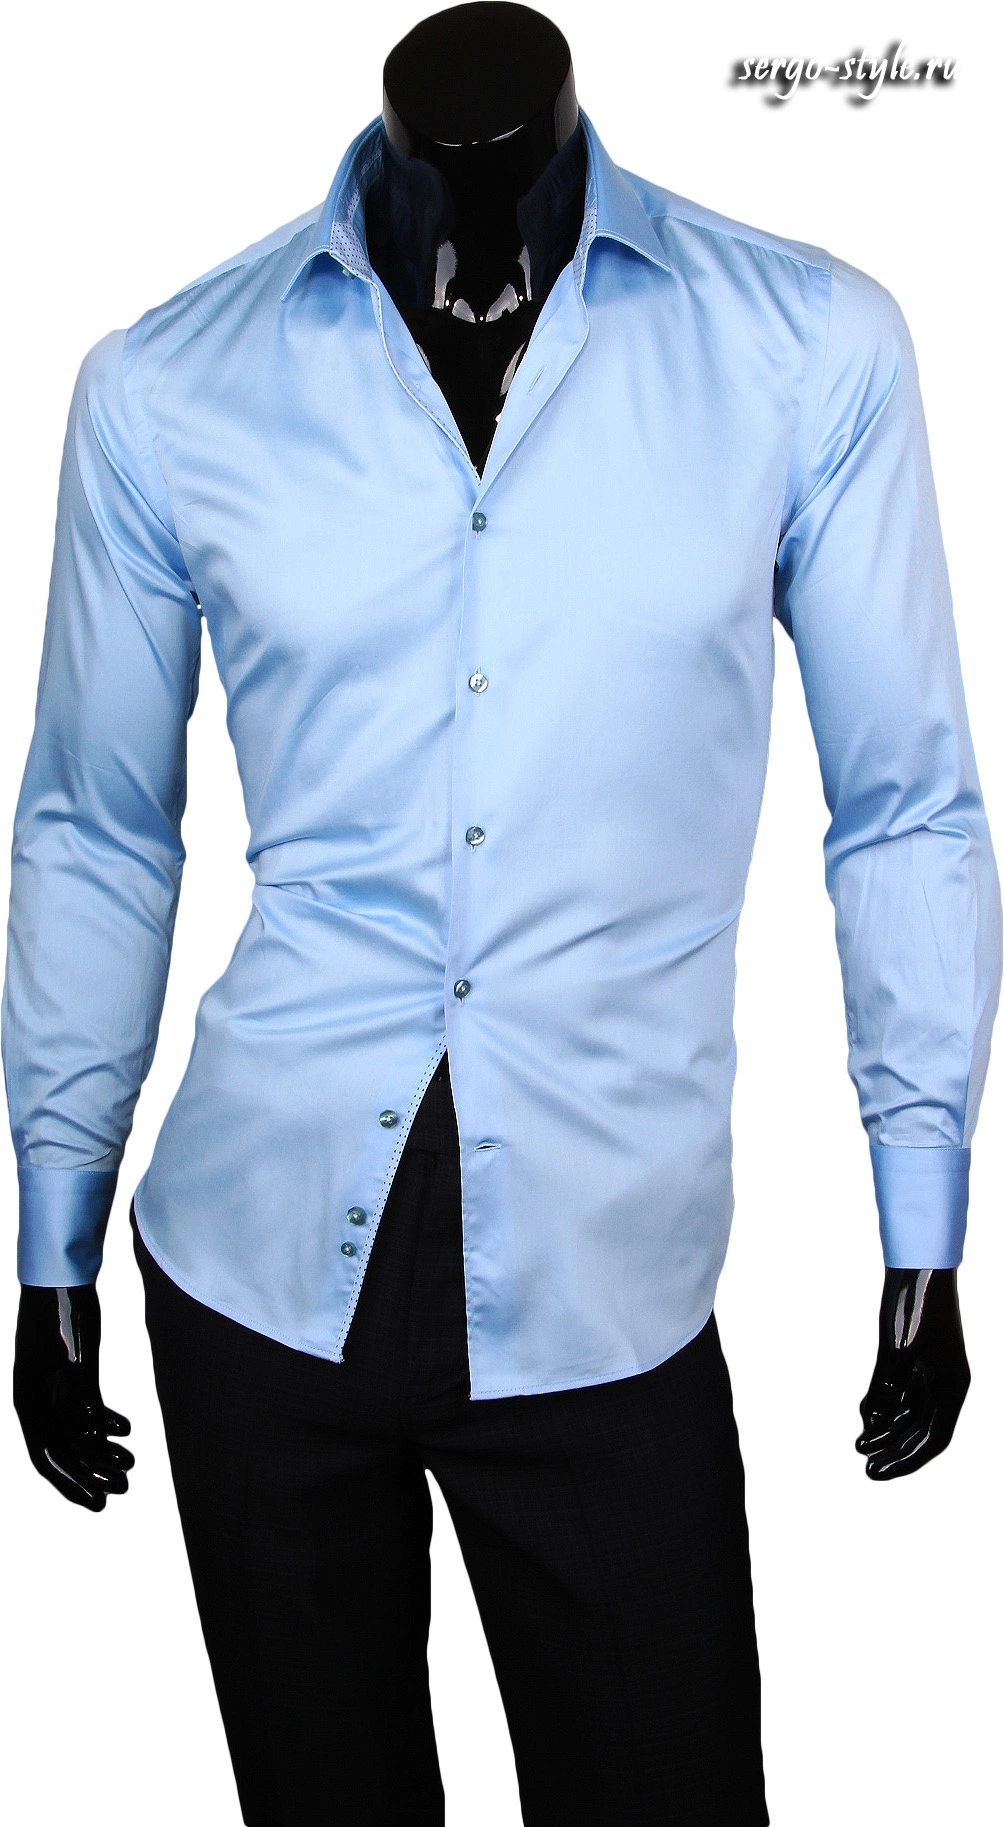 Приталенные мужские рубашки Venturo артикул 3000-02